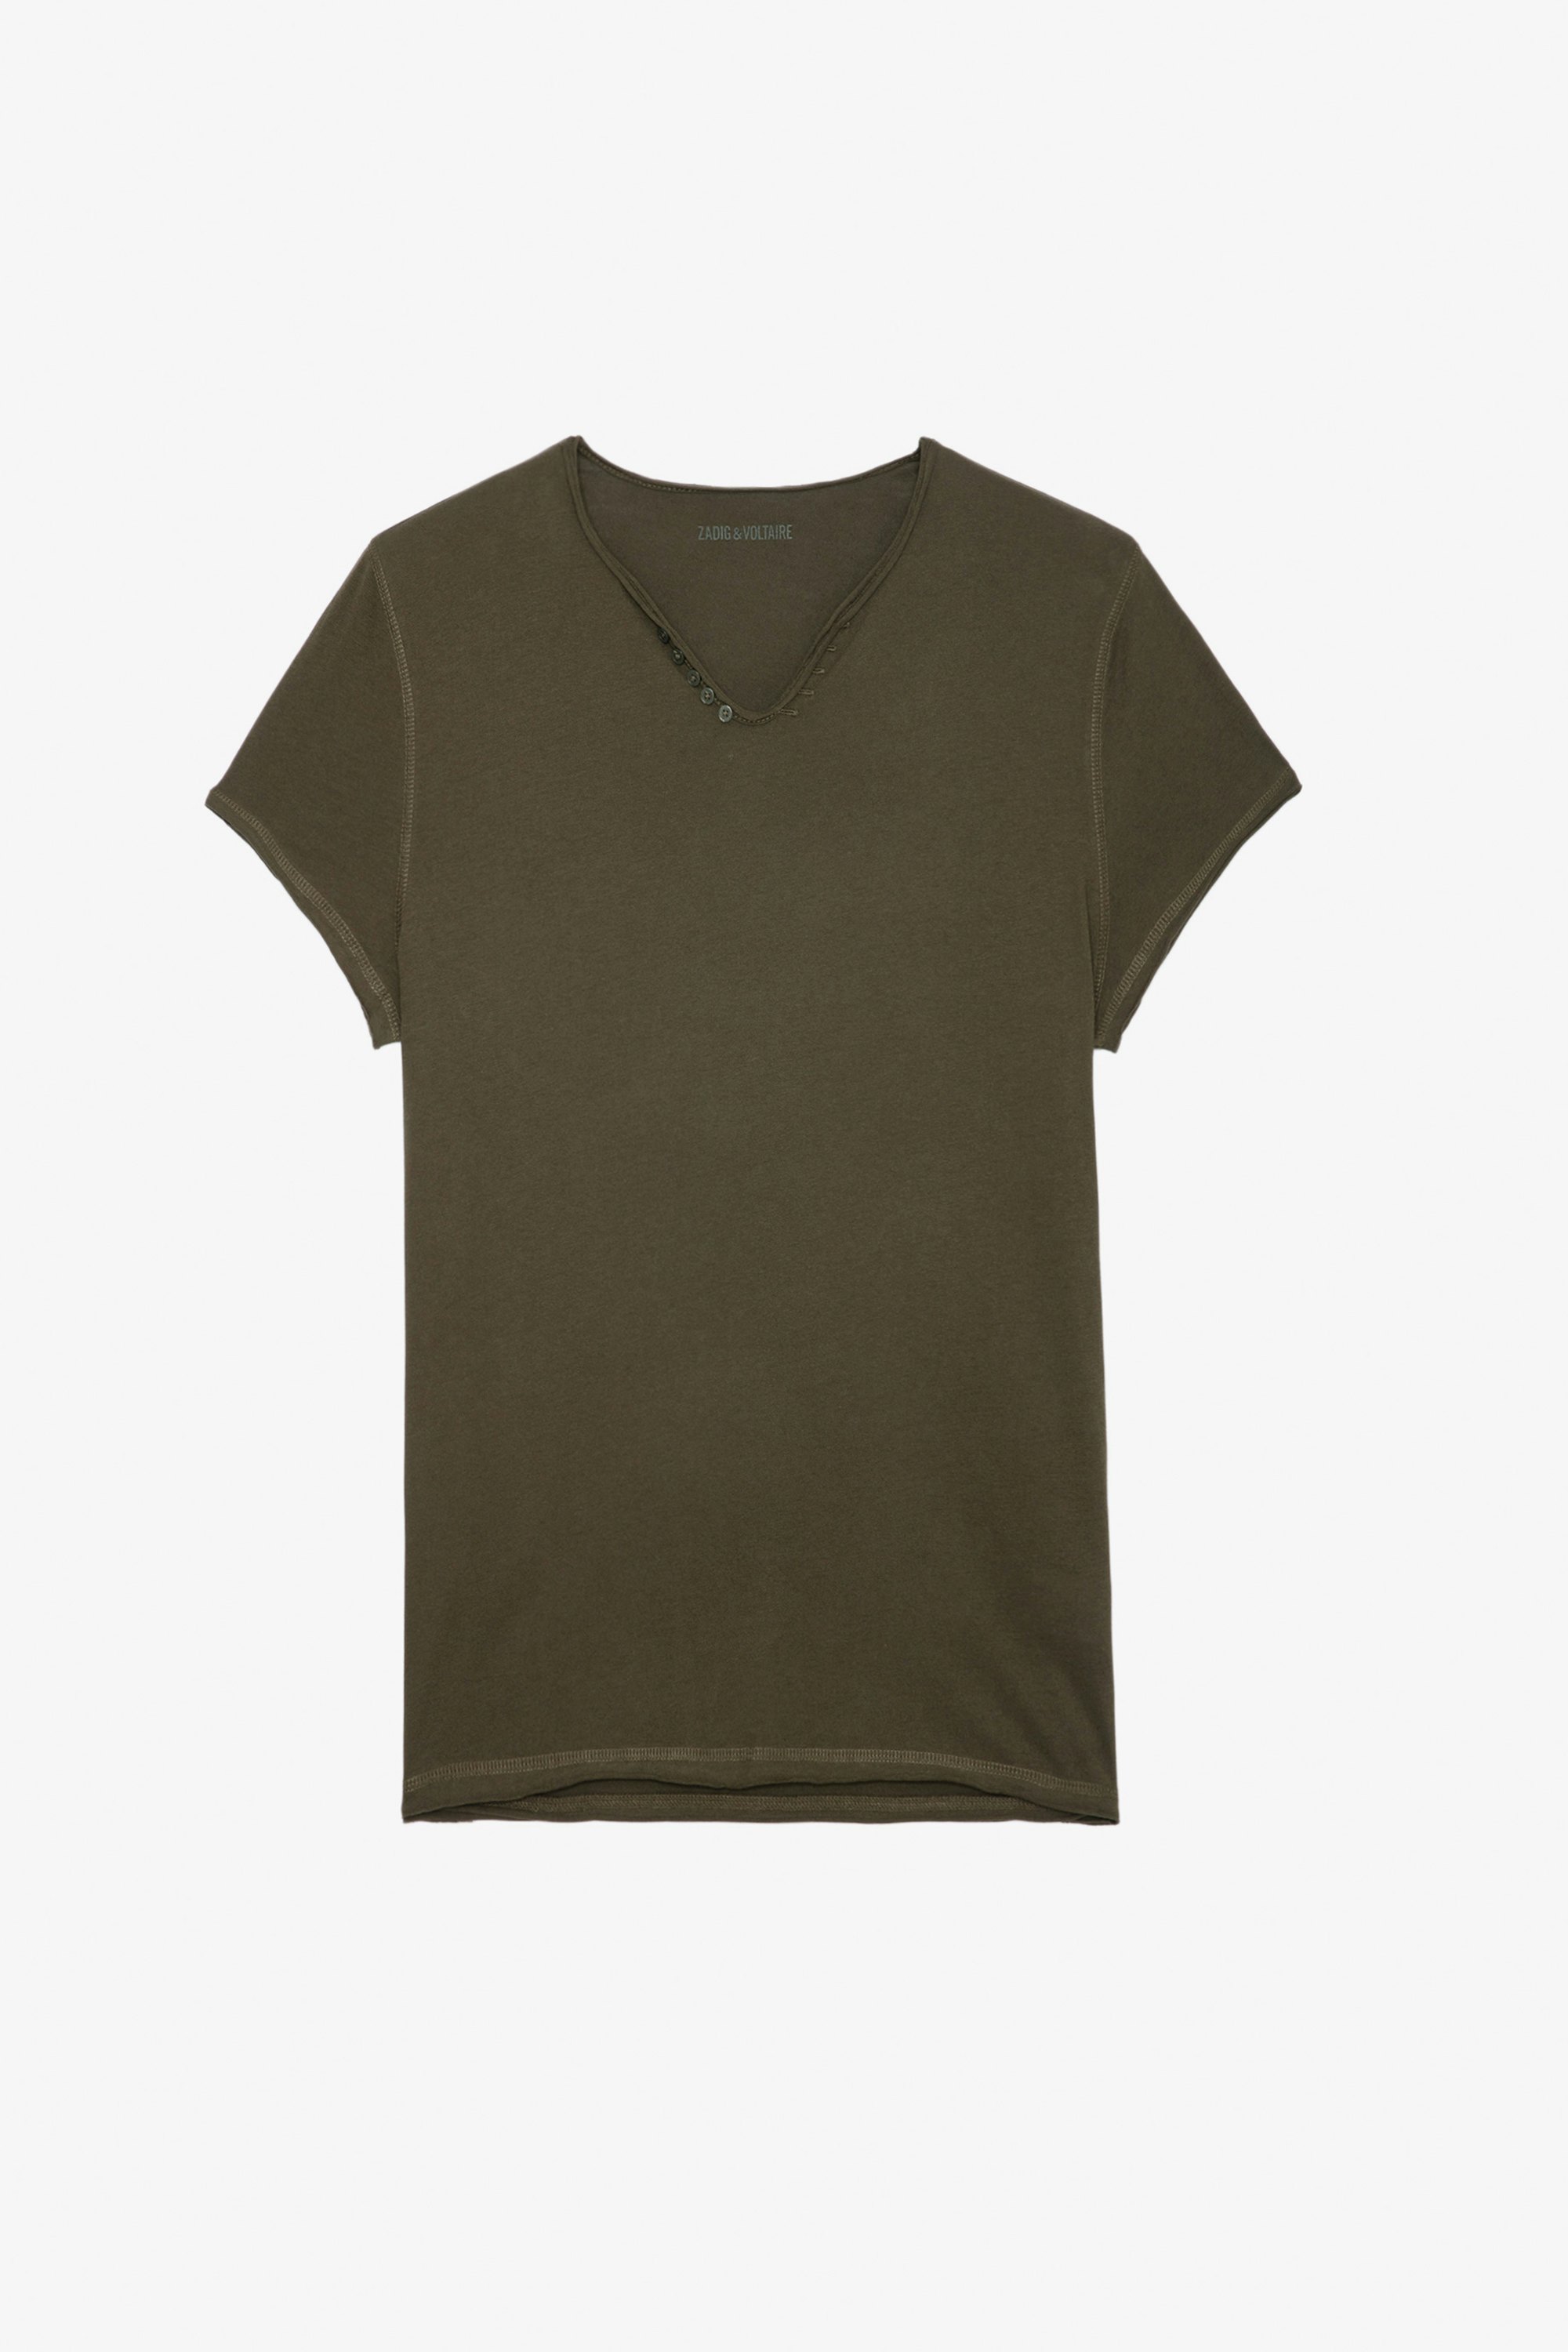 Monastir T-Shirt - Men’s khaki cotton short-sleeved Henley T-shirt with Sex print.